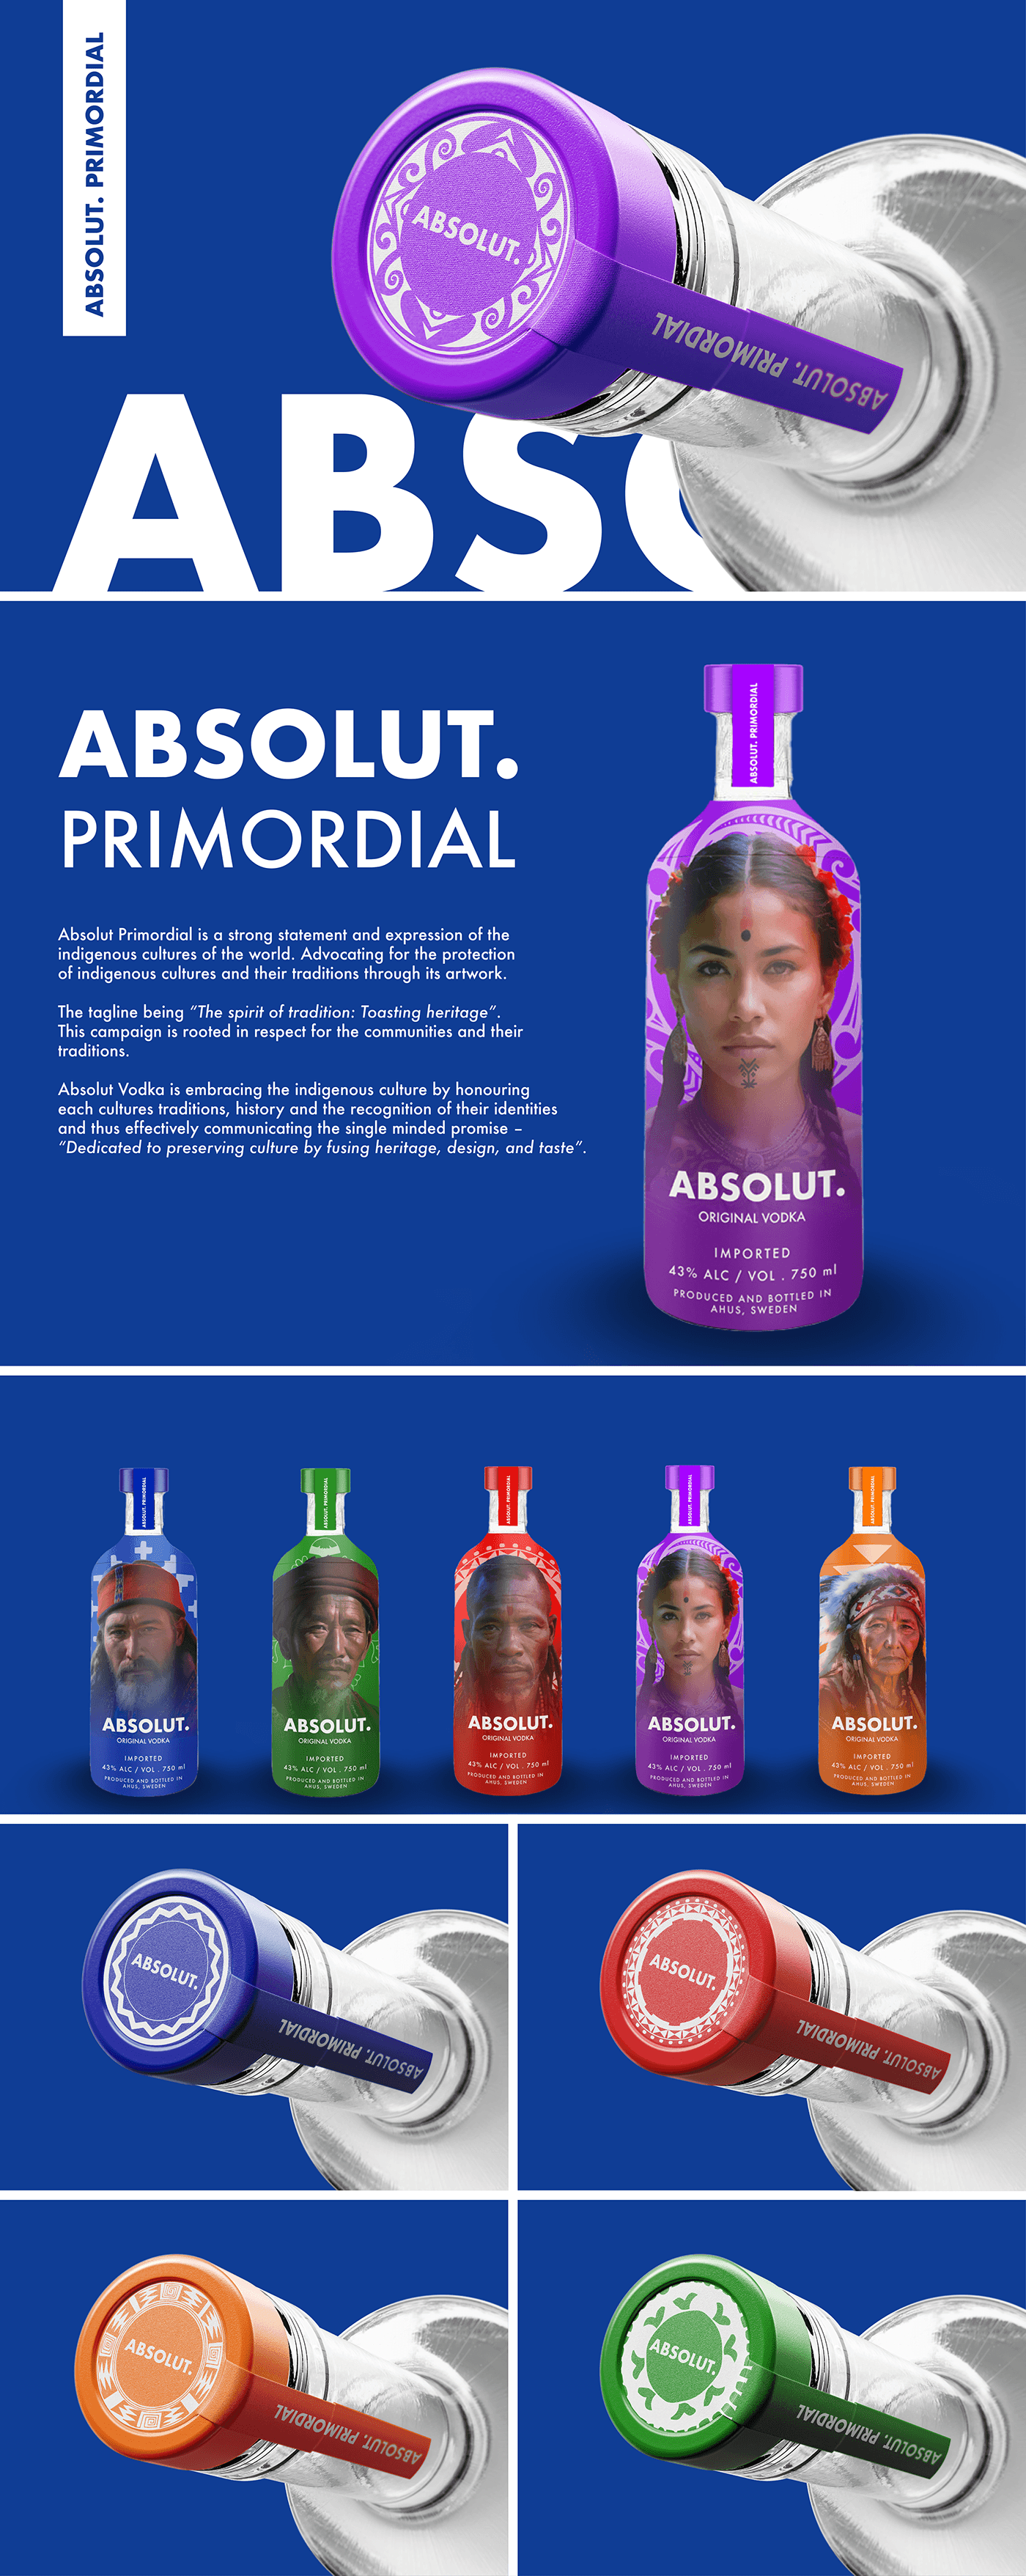 absolut Vodka alcohol culture indigenous premium bottle Label packaging design ILLUSTRATION 